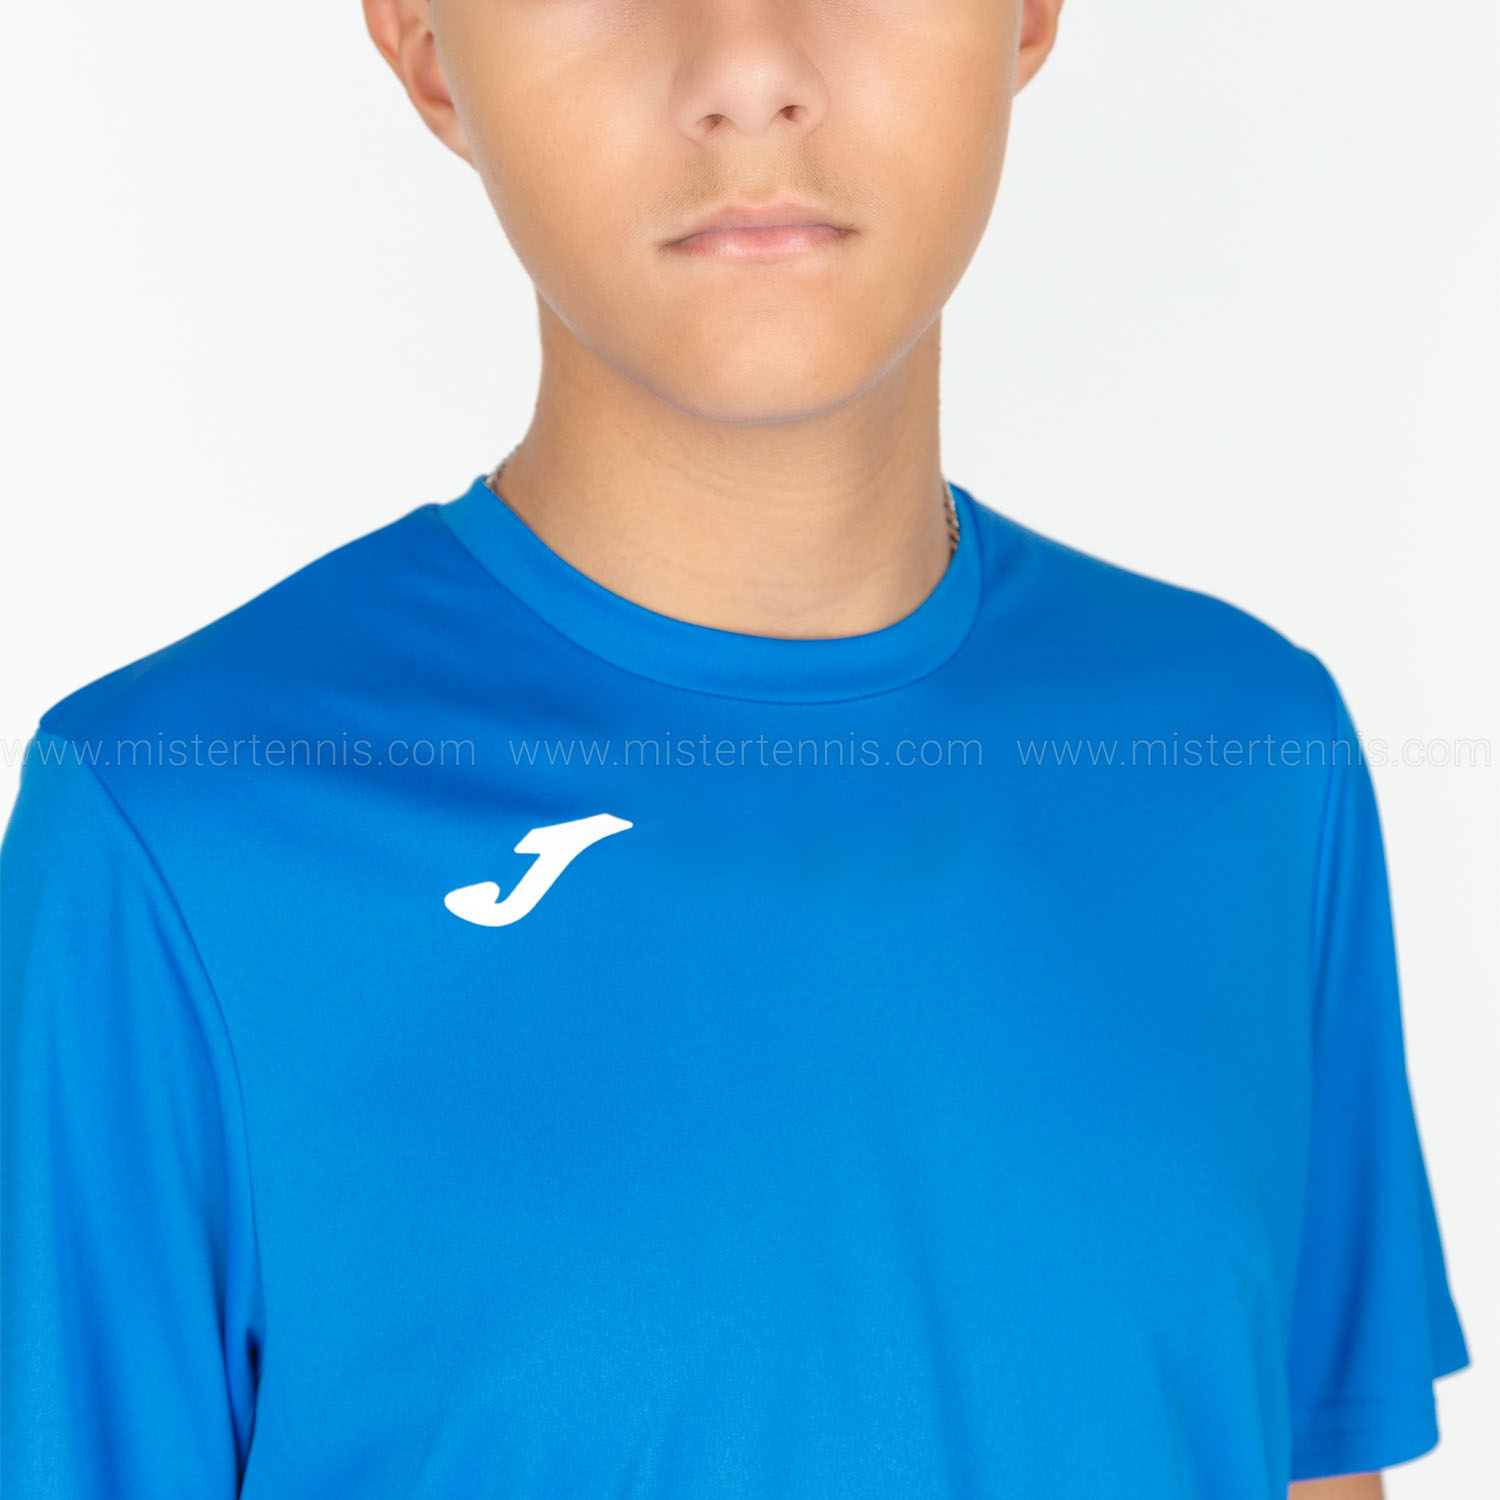 Joma Combi Camiseta Niño - Blue/White